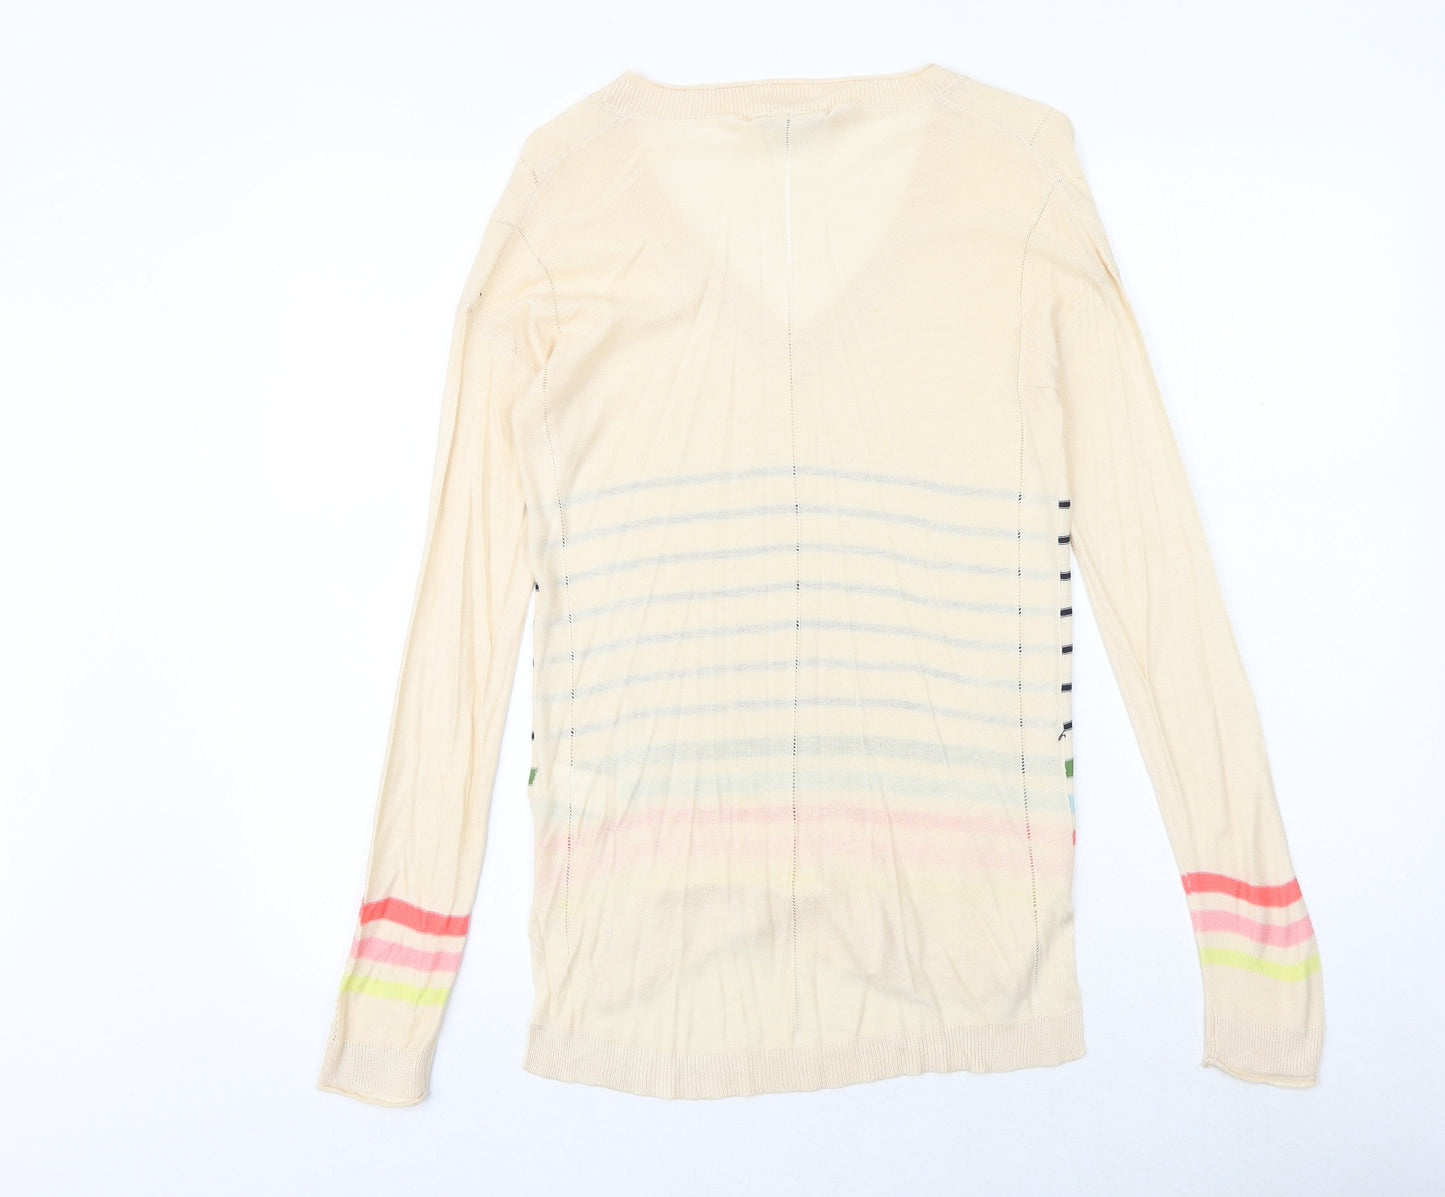 NEXT Womens Multicoloured Striped Viscose Basic Blouse Size 8 V-Neck - Sheer